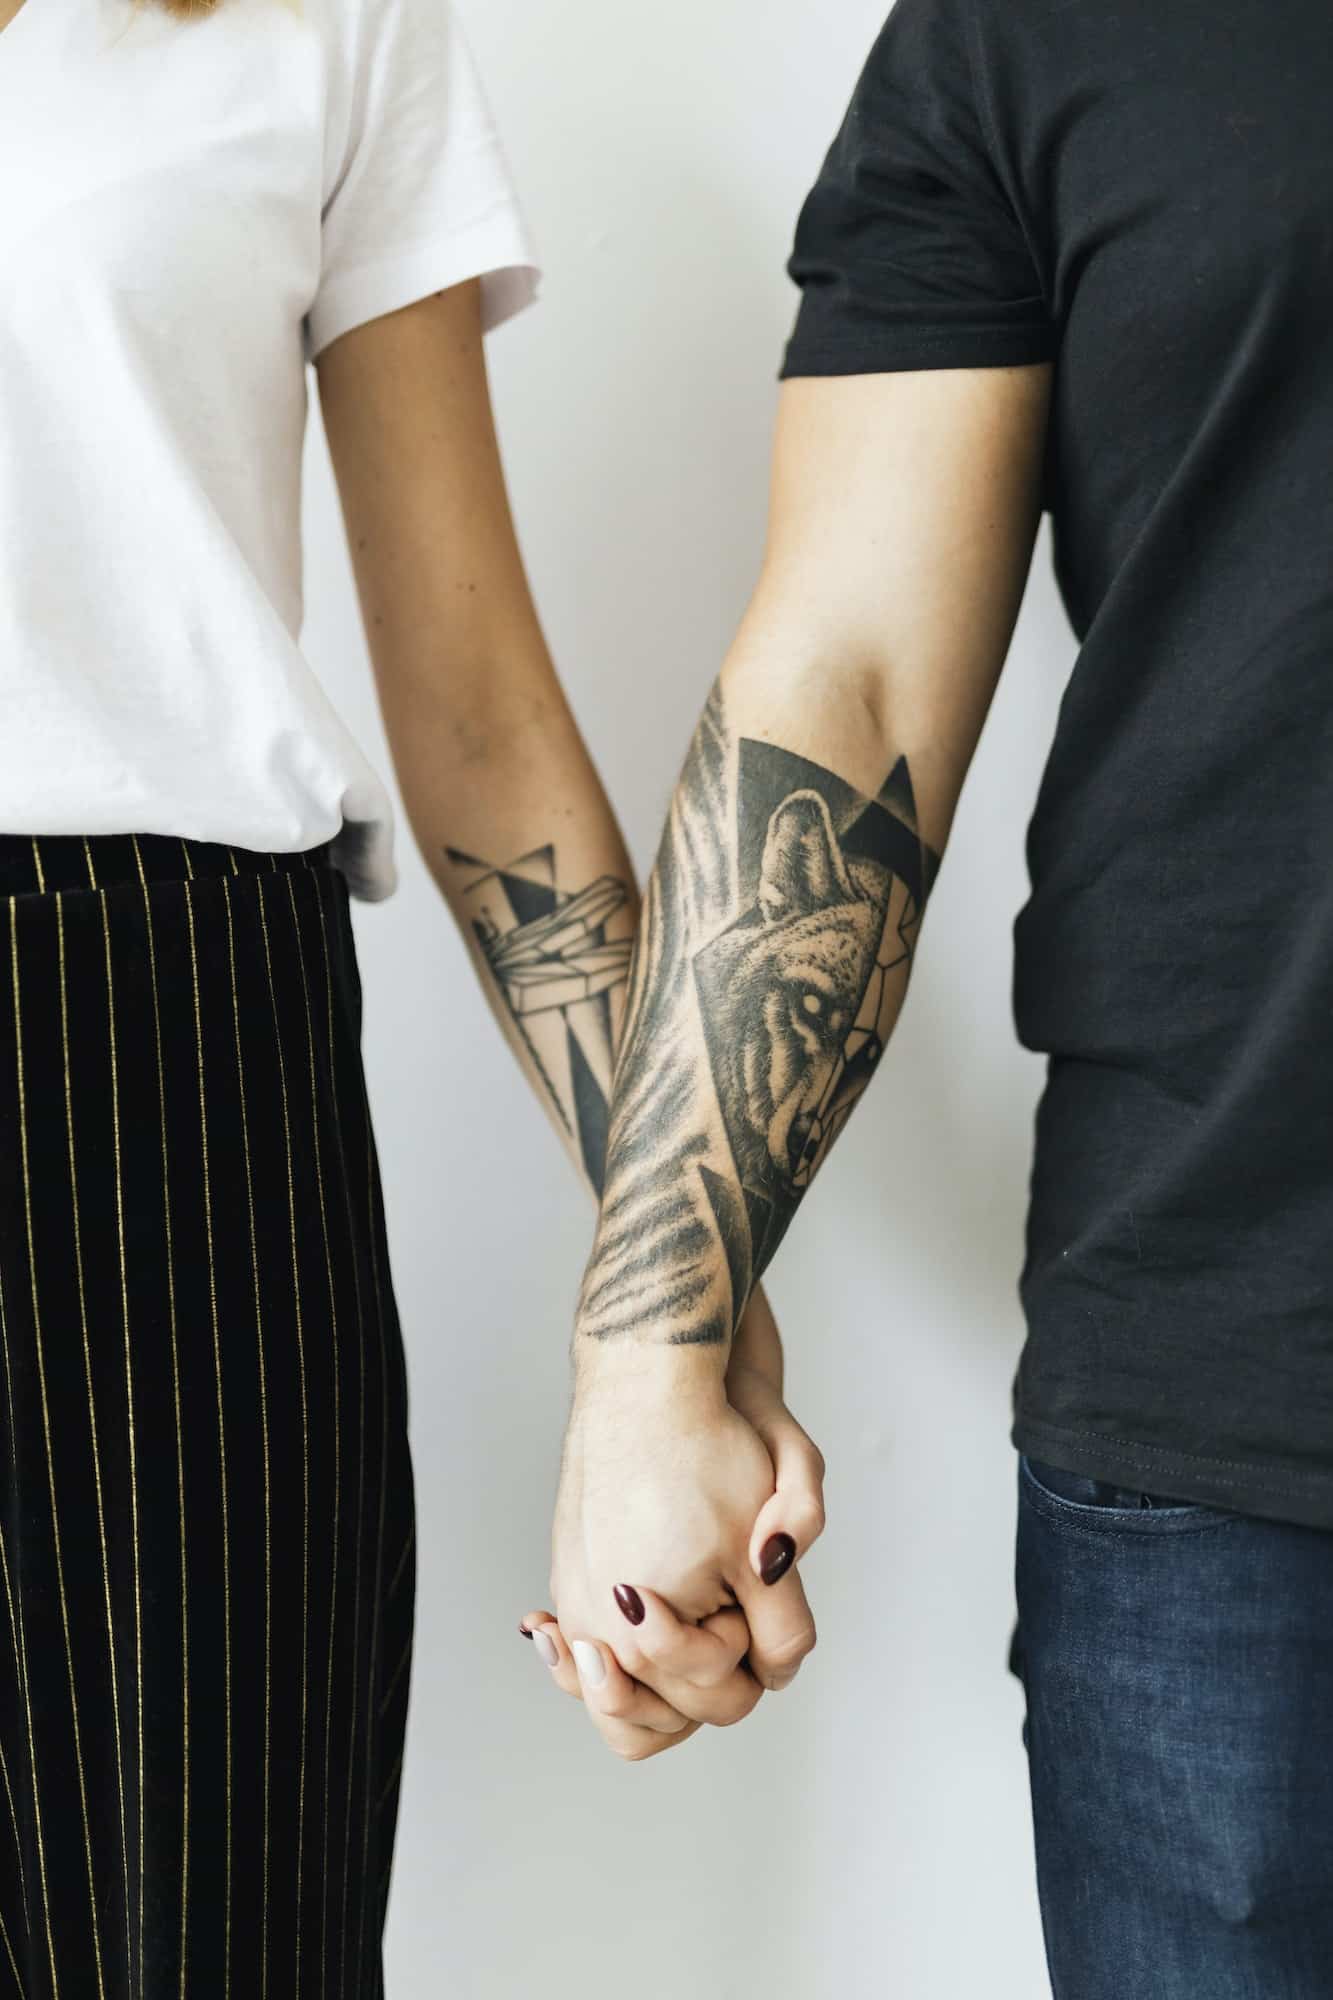 Tattooed hands holding hands